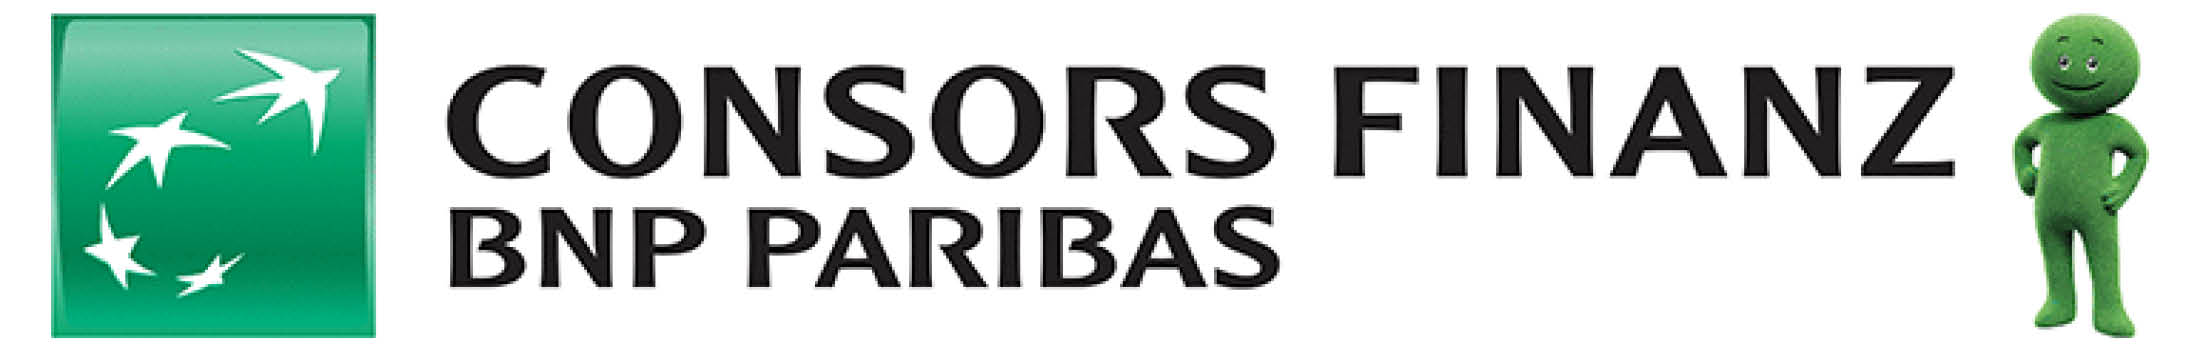 Consors Finanz Logo